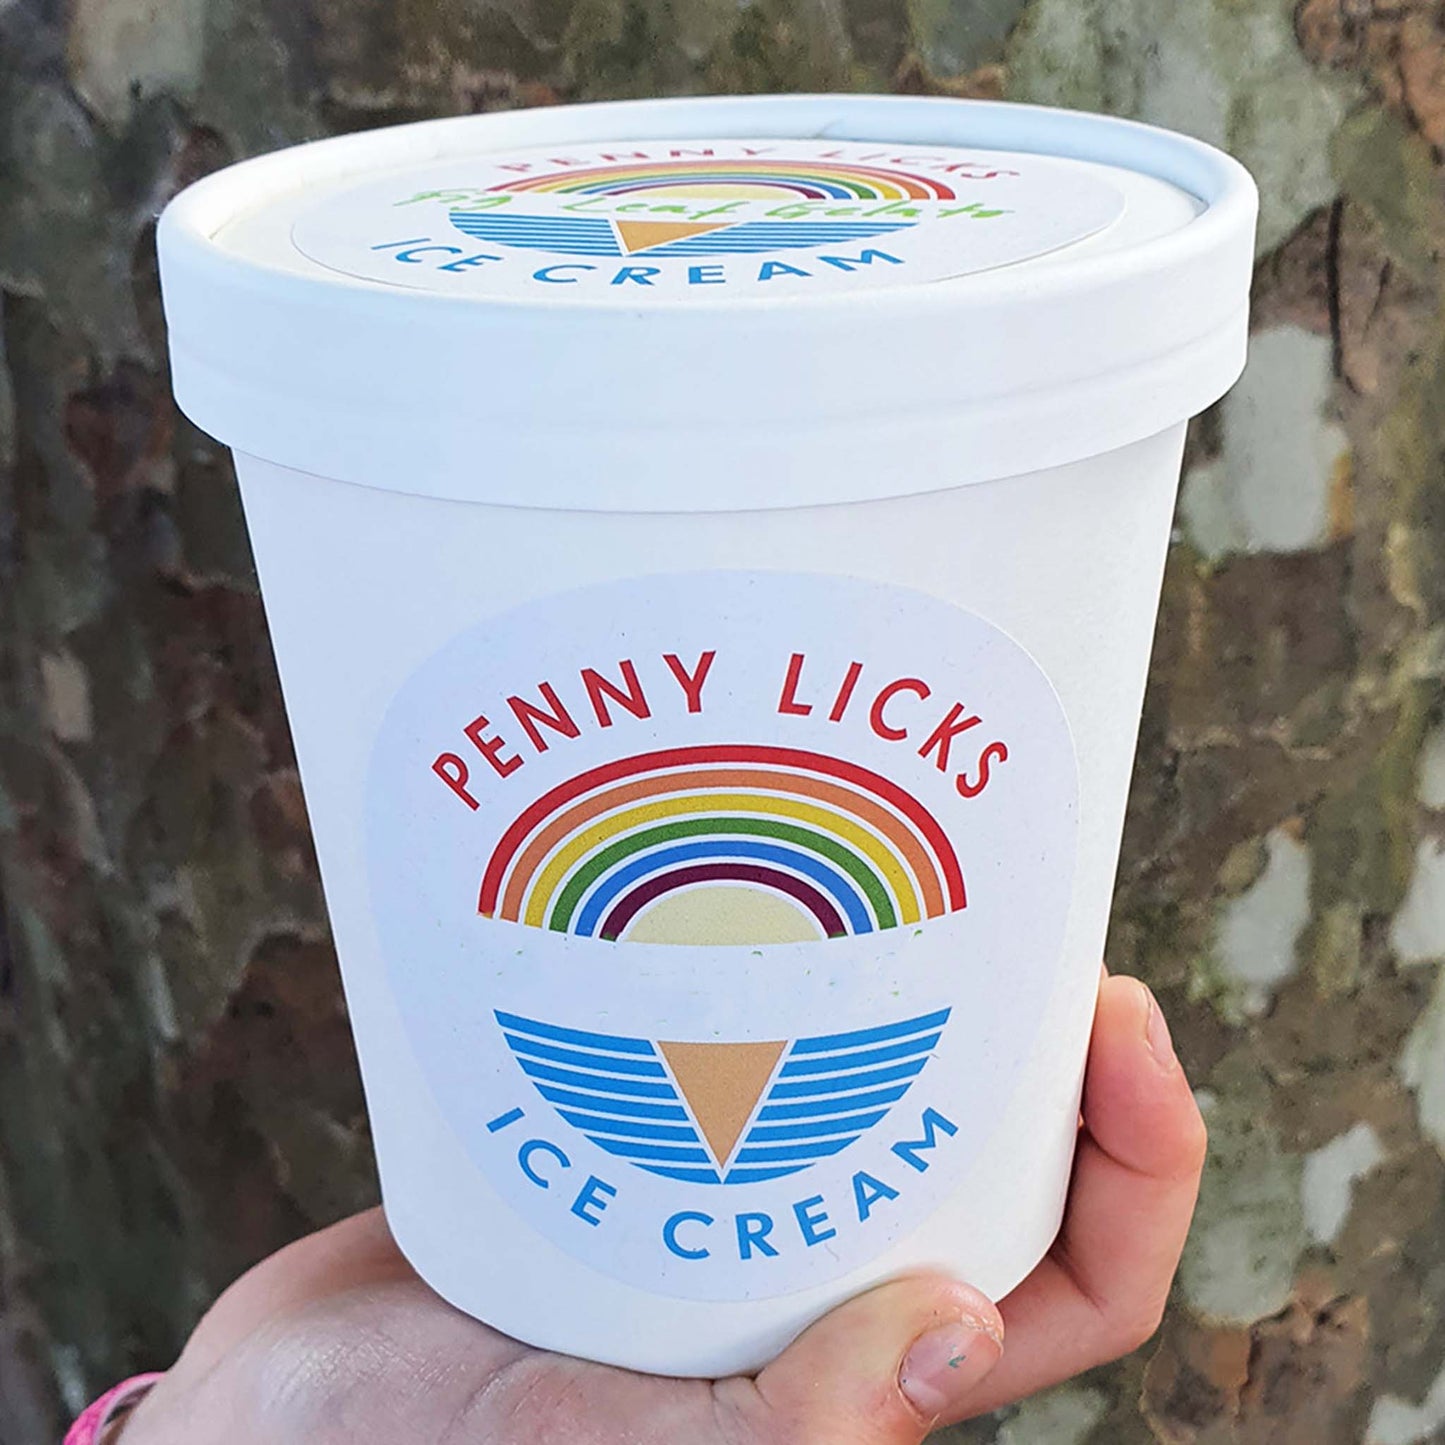 penny licks ice cream pint tub